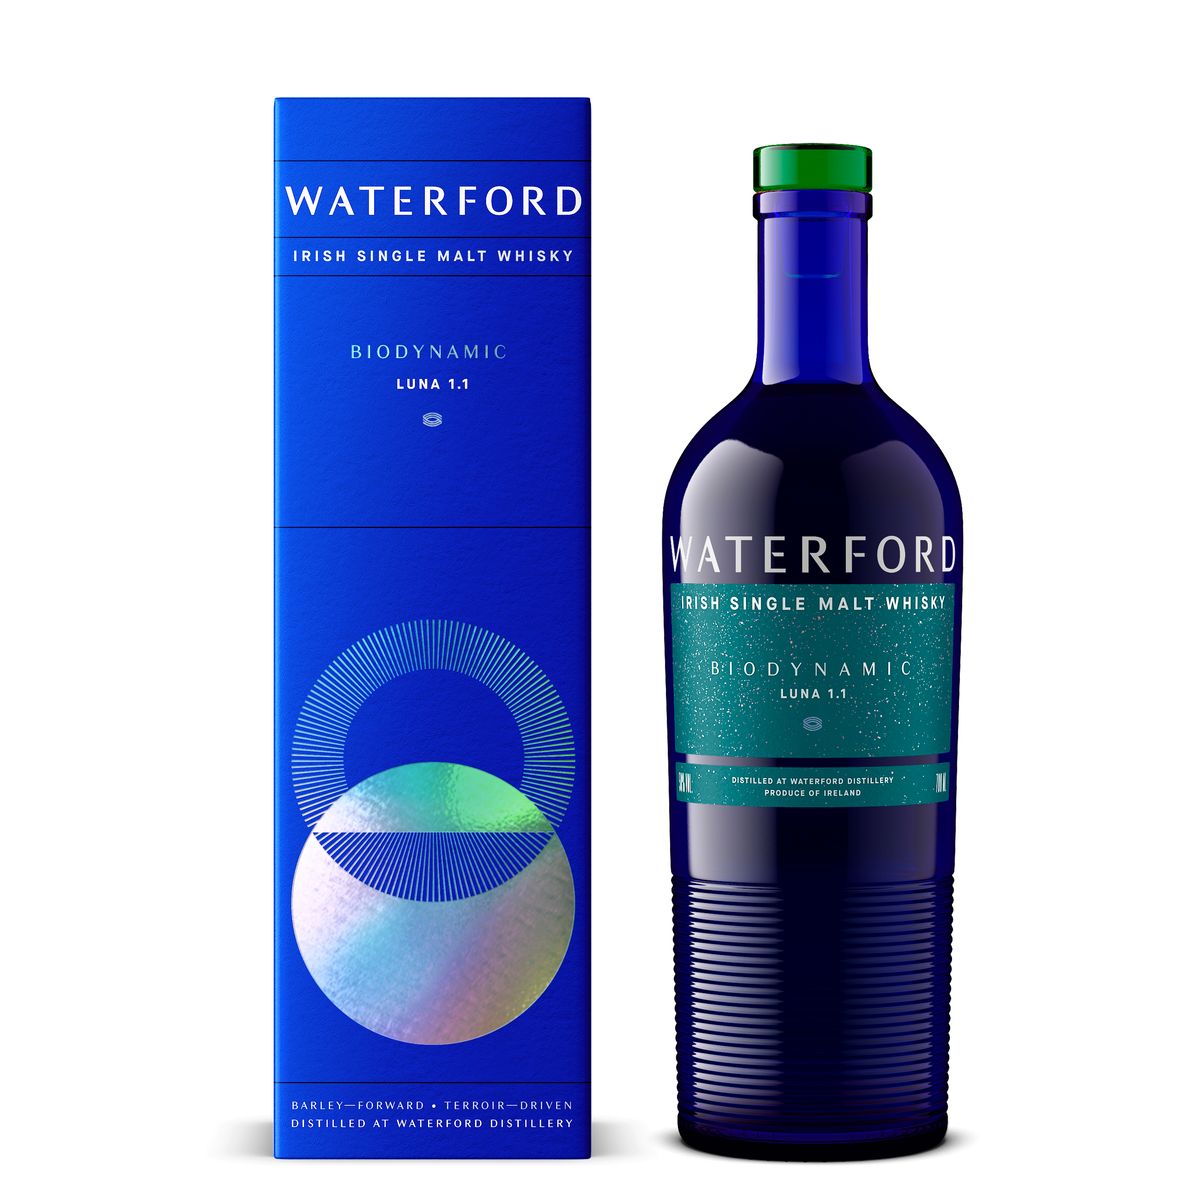 Waterford Irish Single Malt Whisky Biodynamic LUNA 1.1 700ml